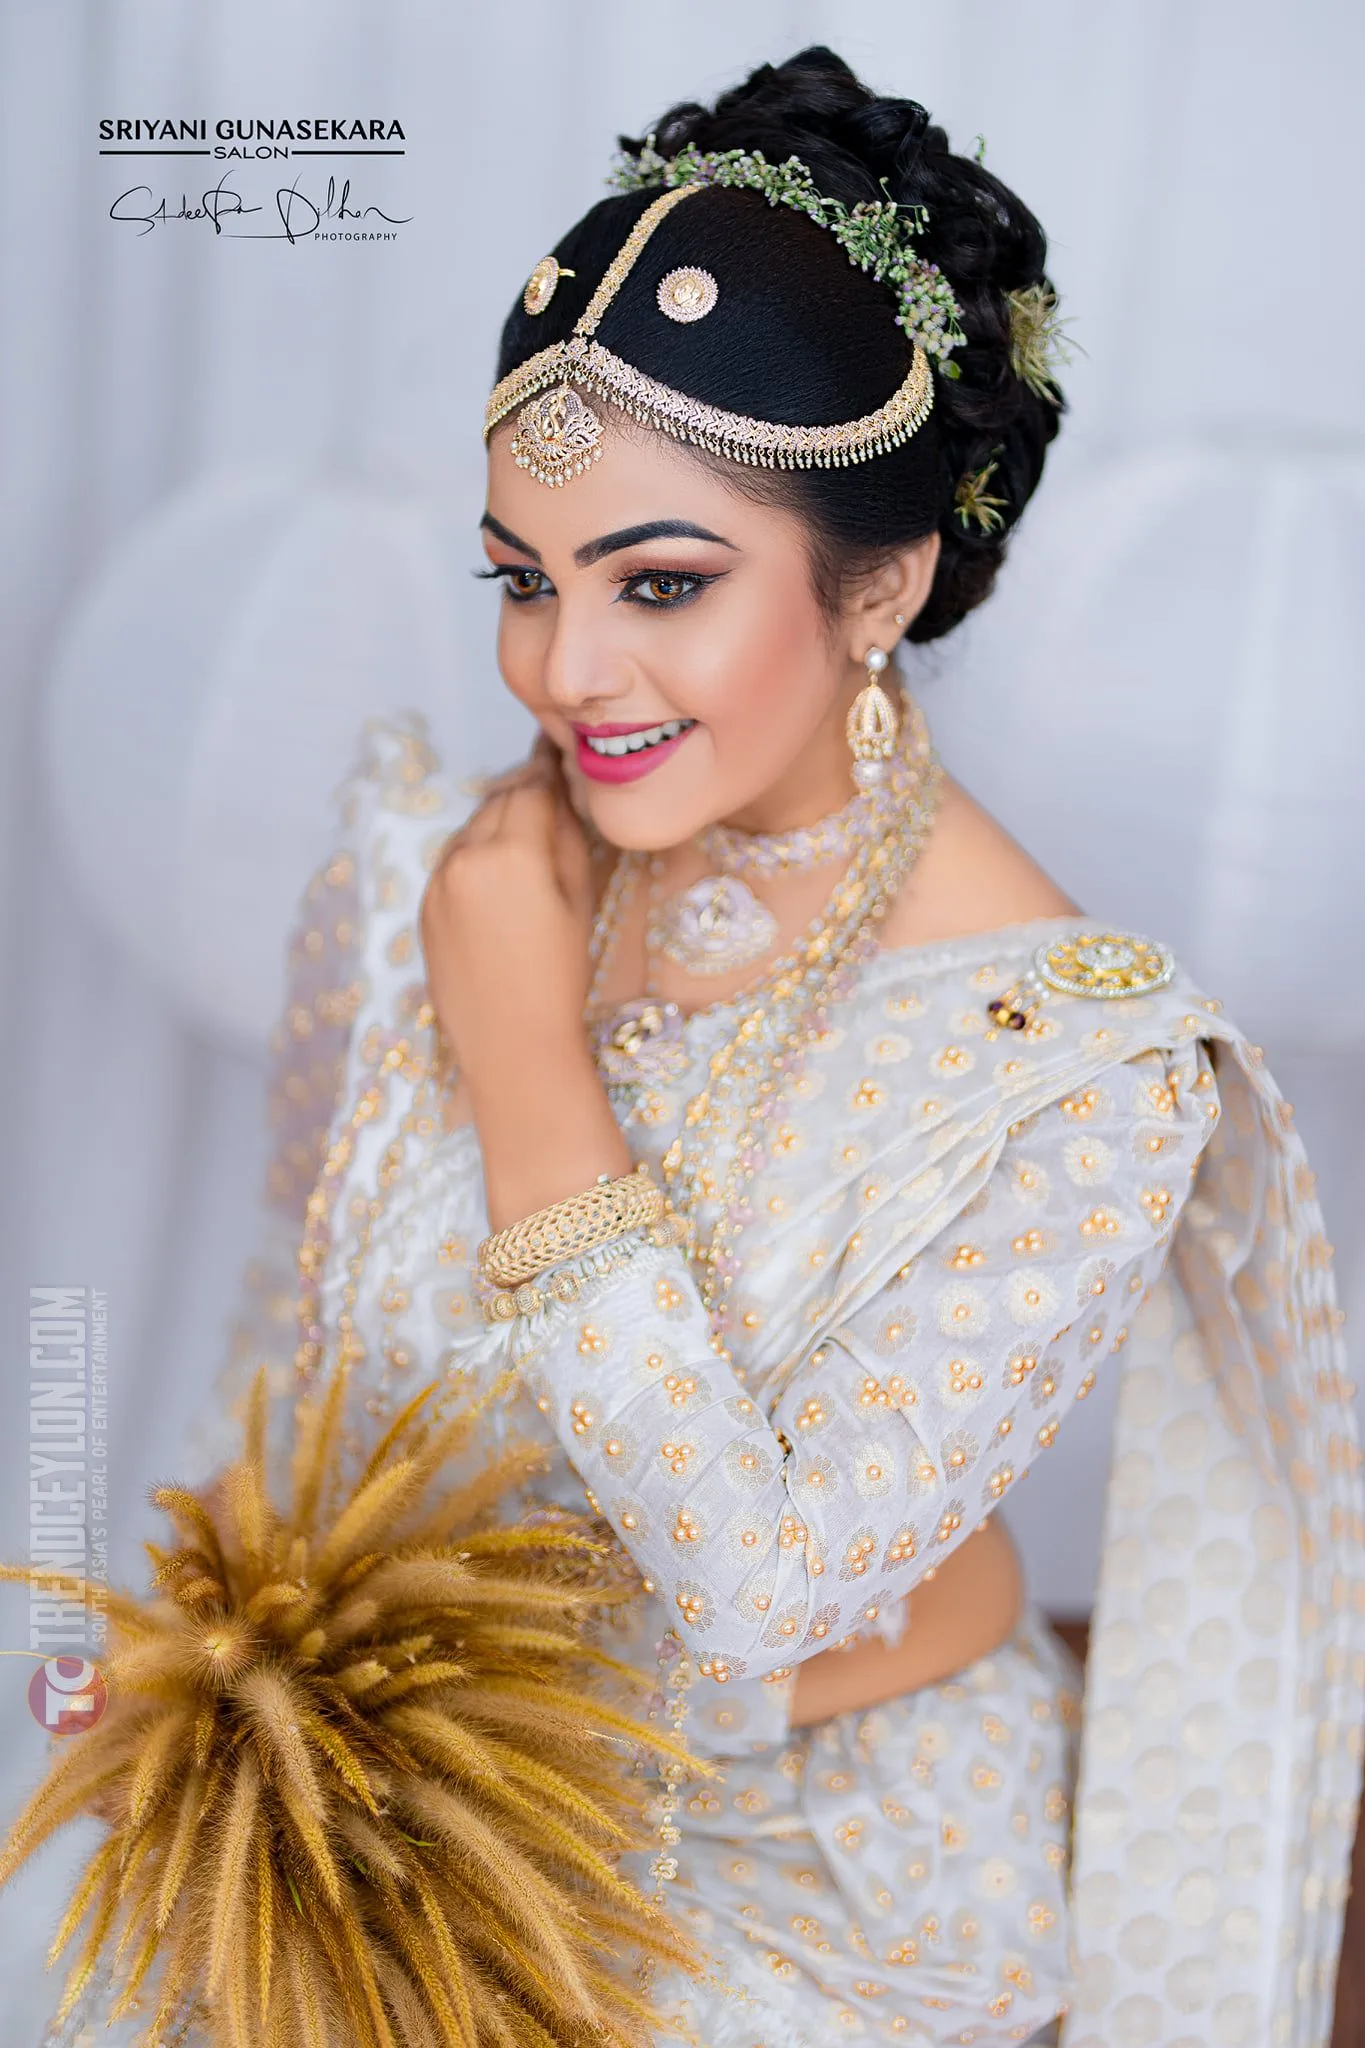 Sri Lankan model Nethmi Kavindaya looks beautiful in Bridal Saree